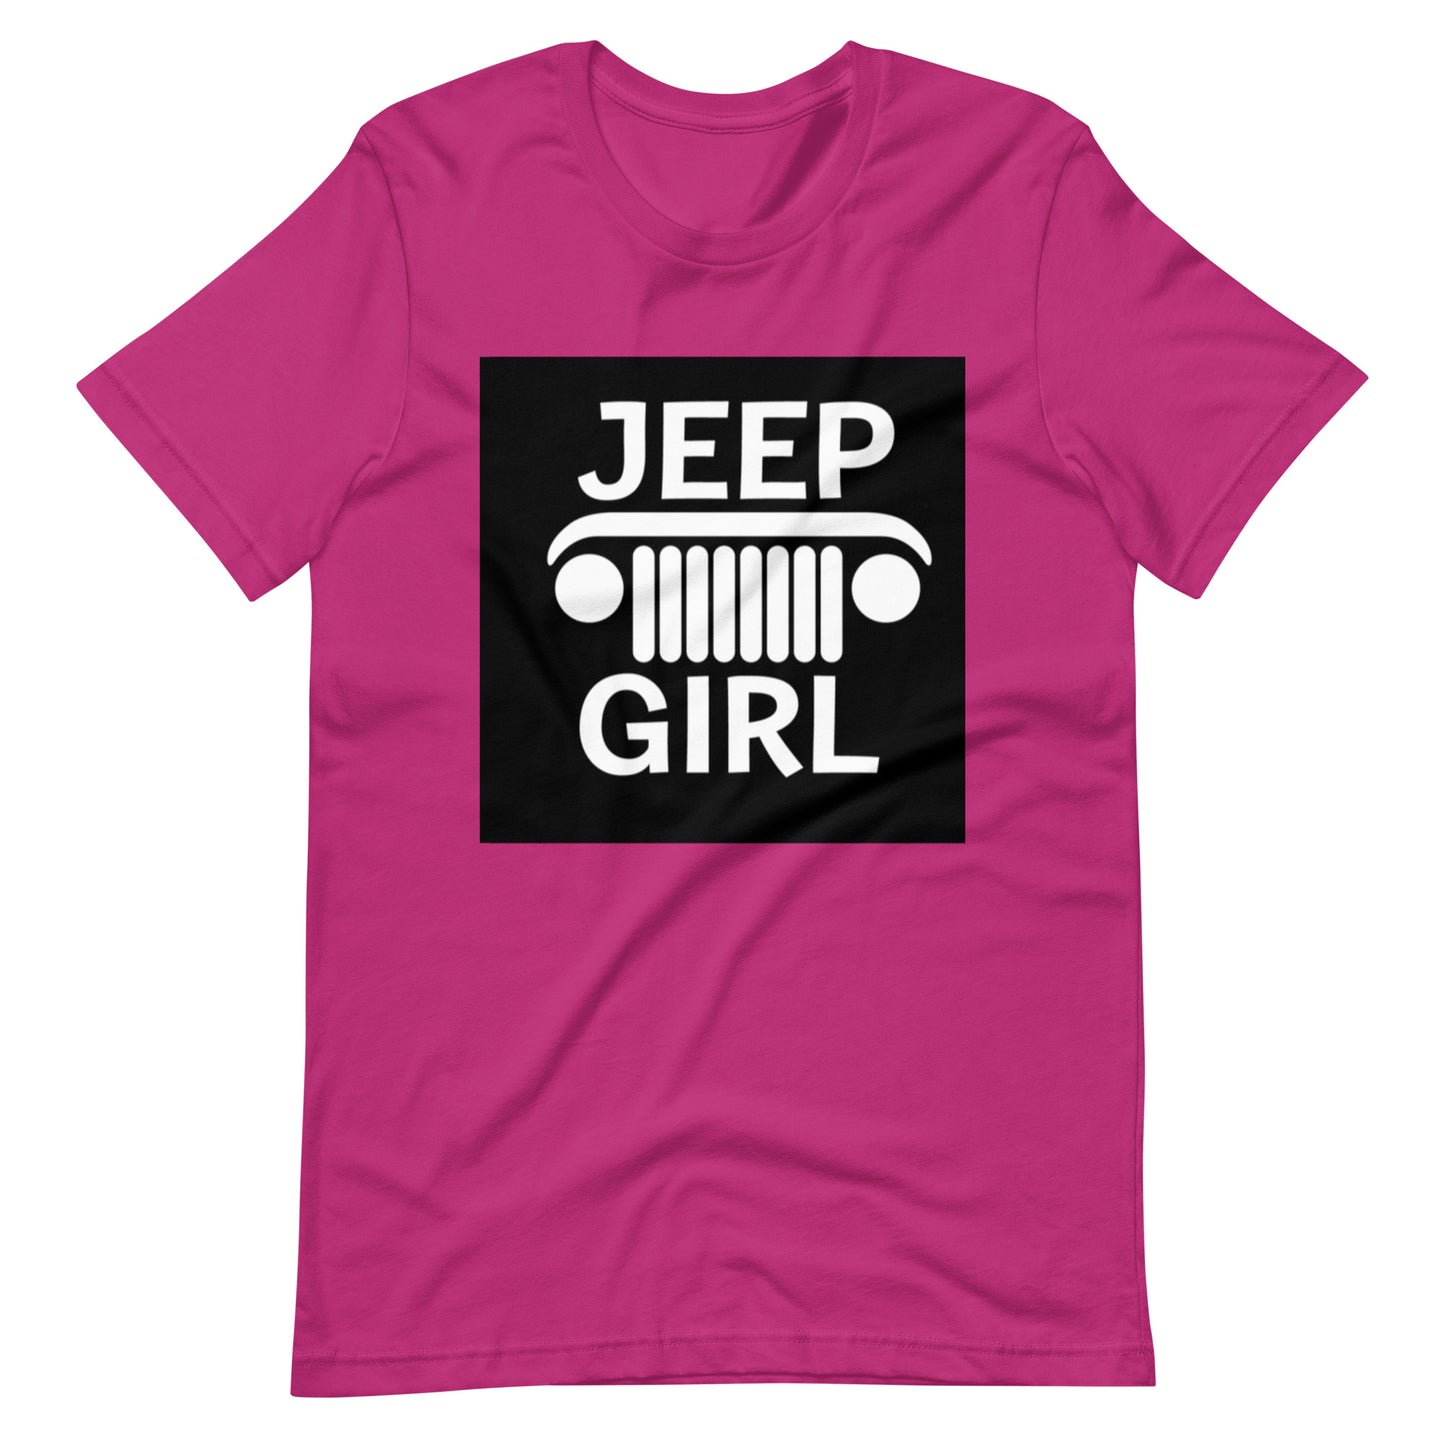 JEEP GIRL t-shirt